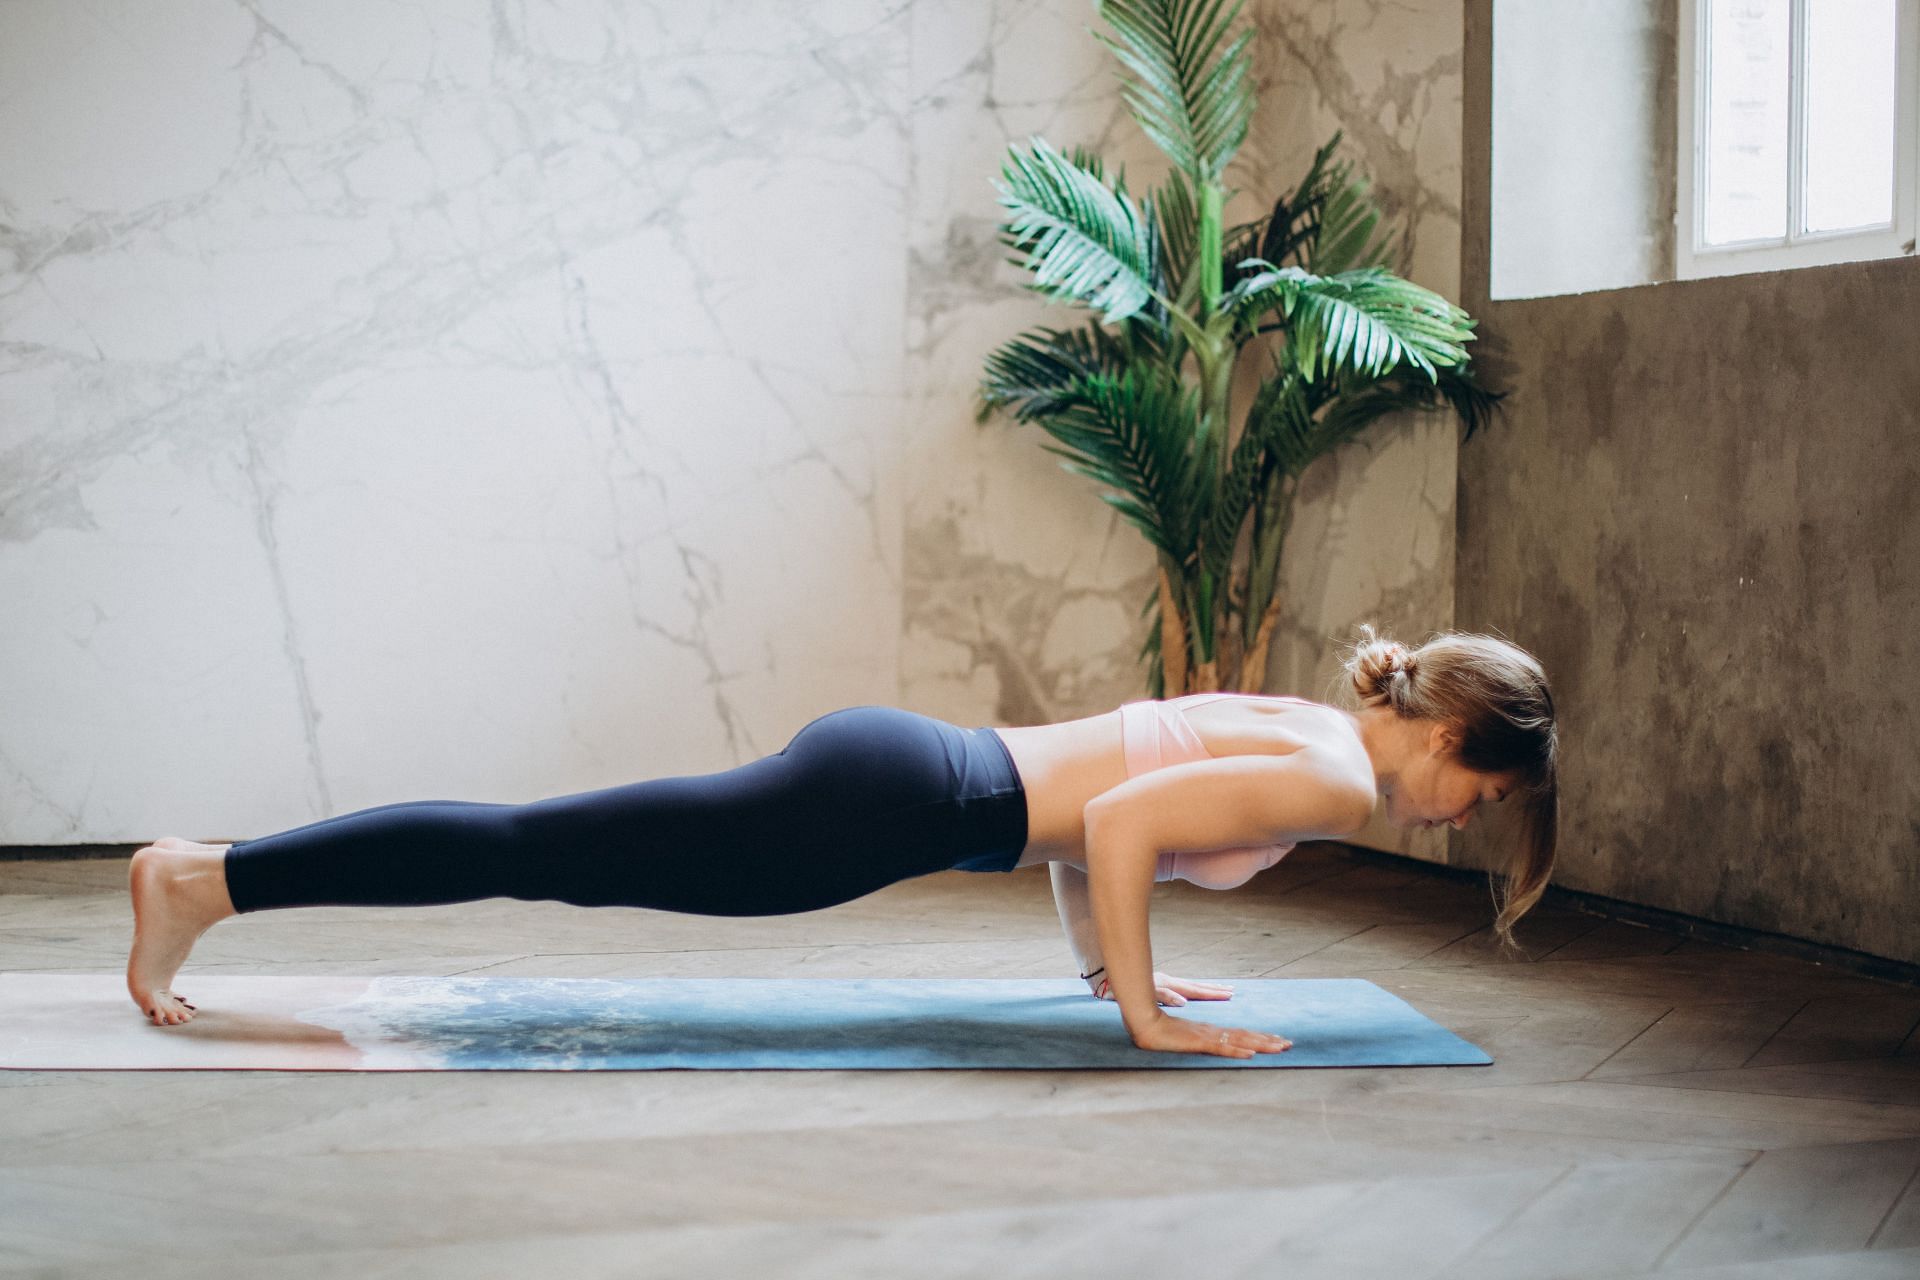 Front plank helps develop endurance in your shoulders. (Image via Pexels/ Elina Fairytale)